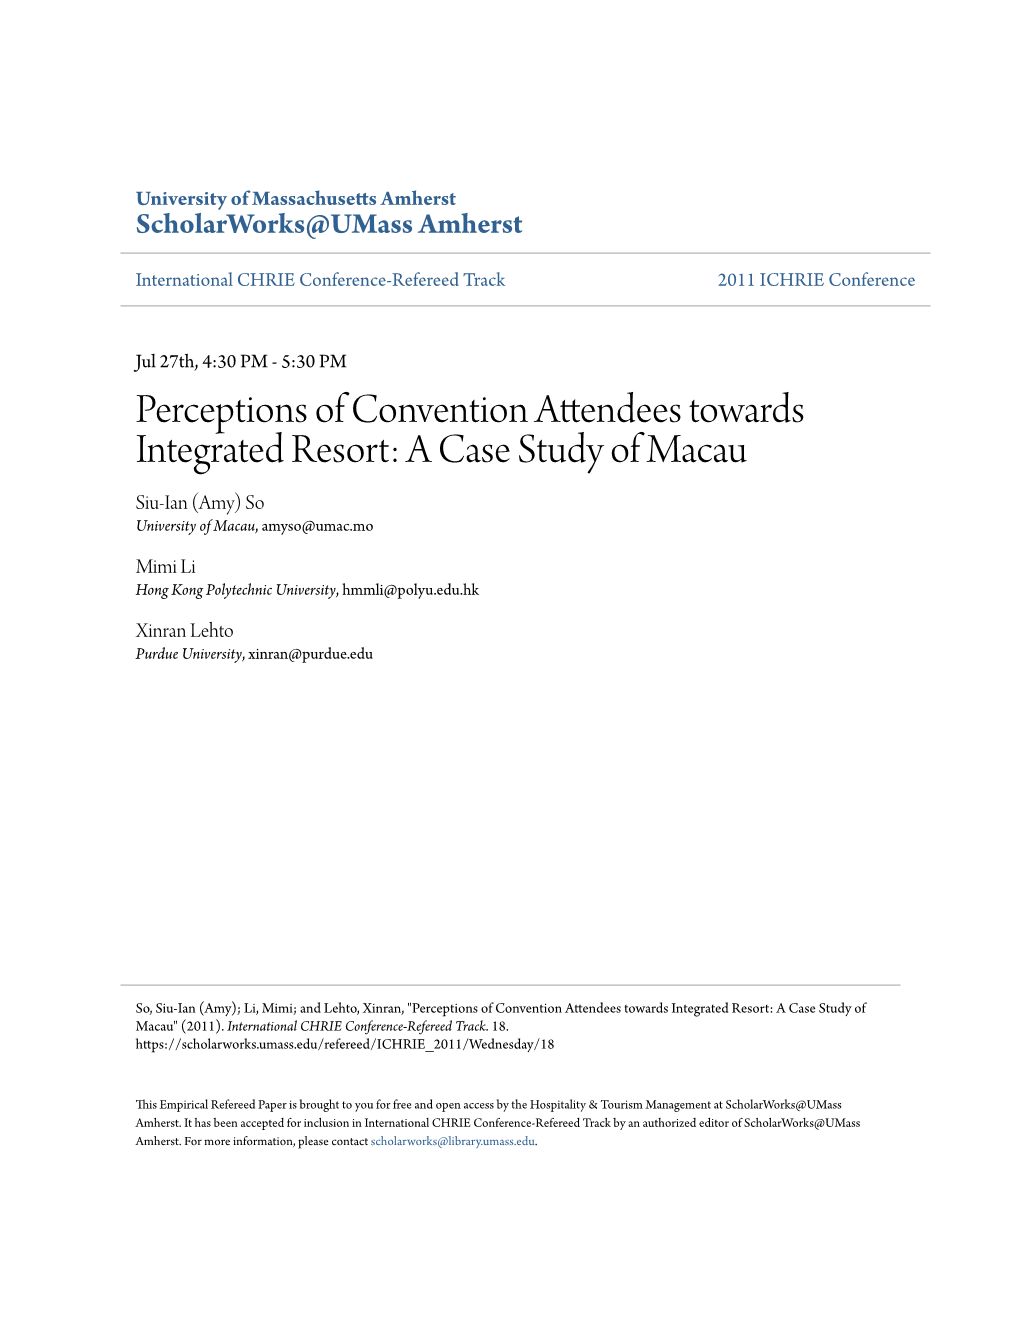 Perceptions of Convention Attendees Towards Integrated Resort: a Case Study of Macau Siu-Ian (Amy) So University of Macau, Amyso@Umac.Mo